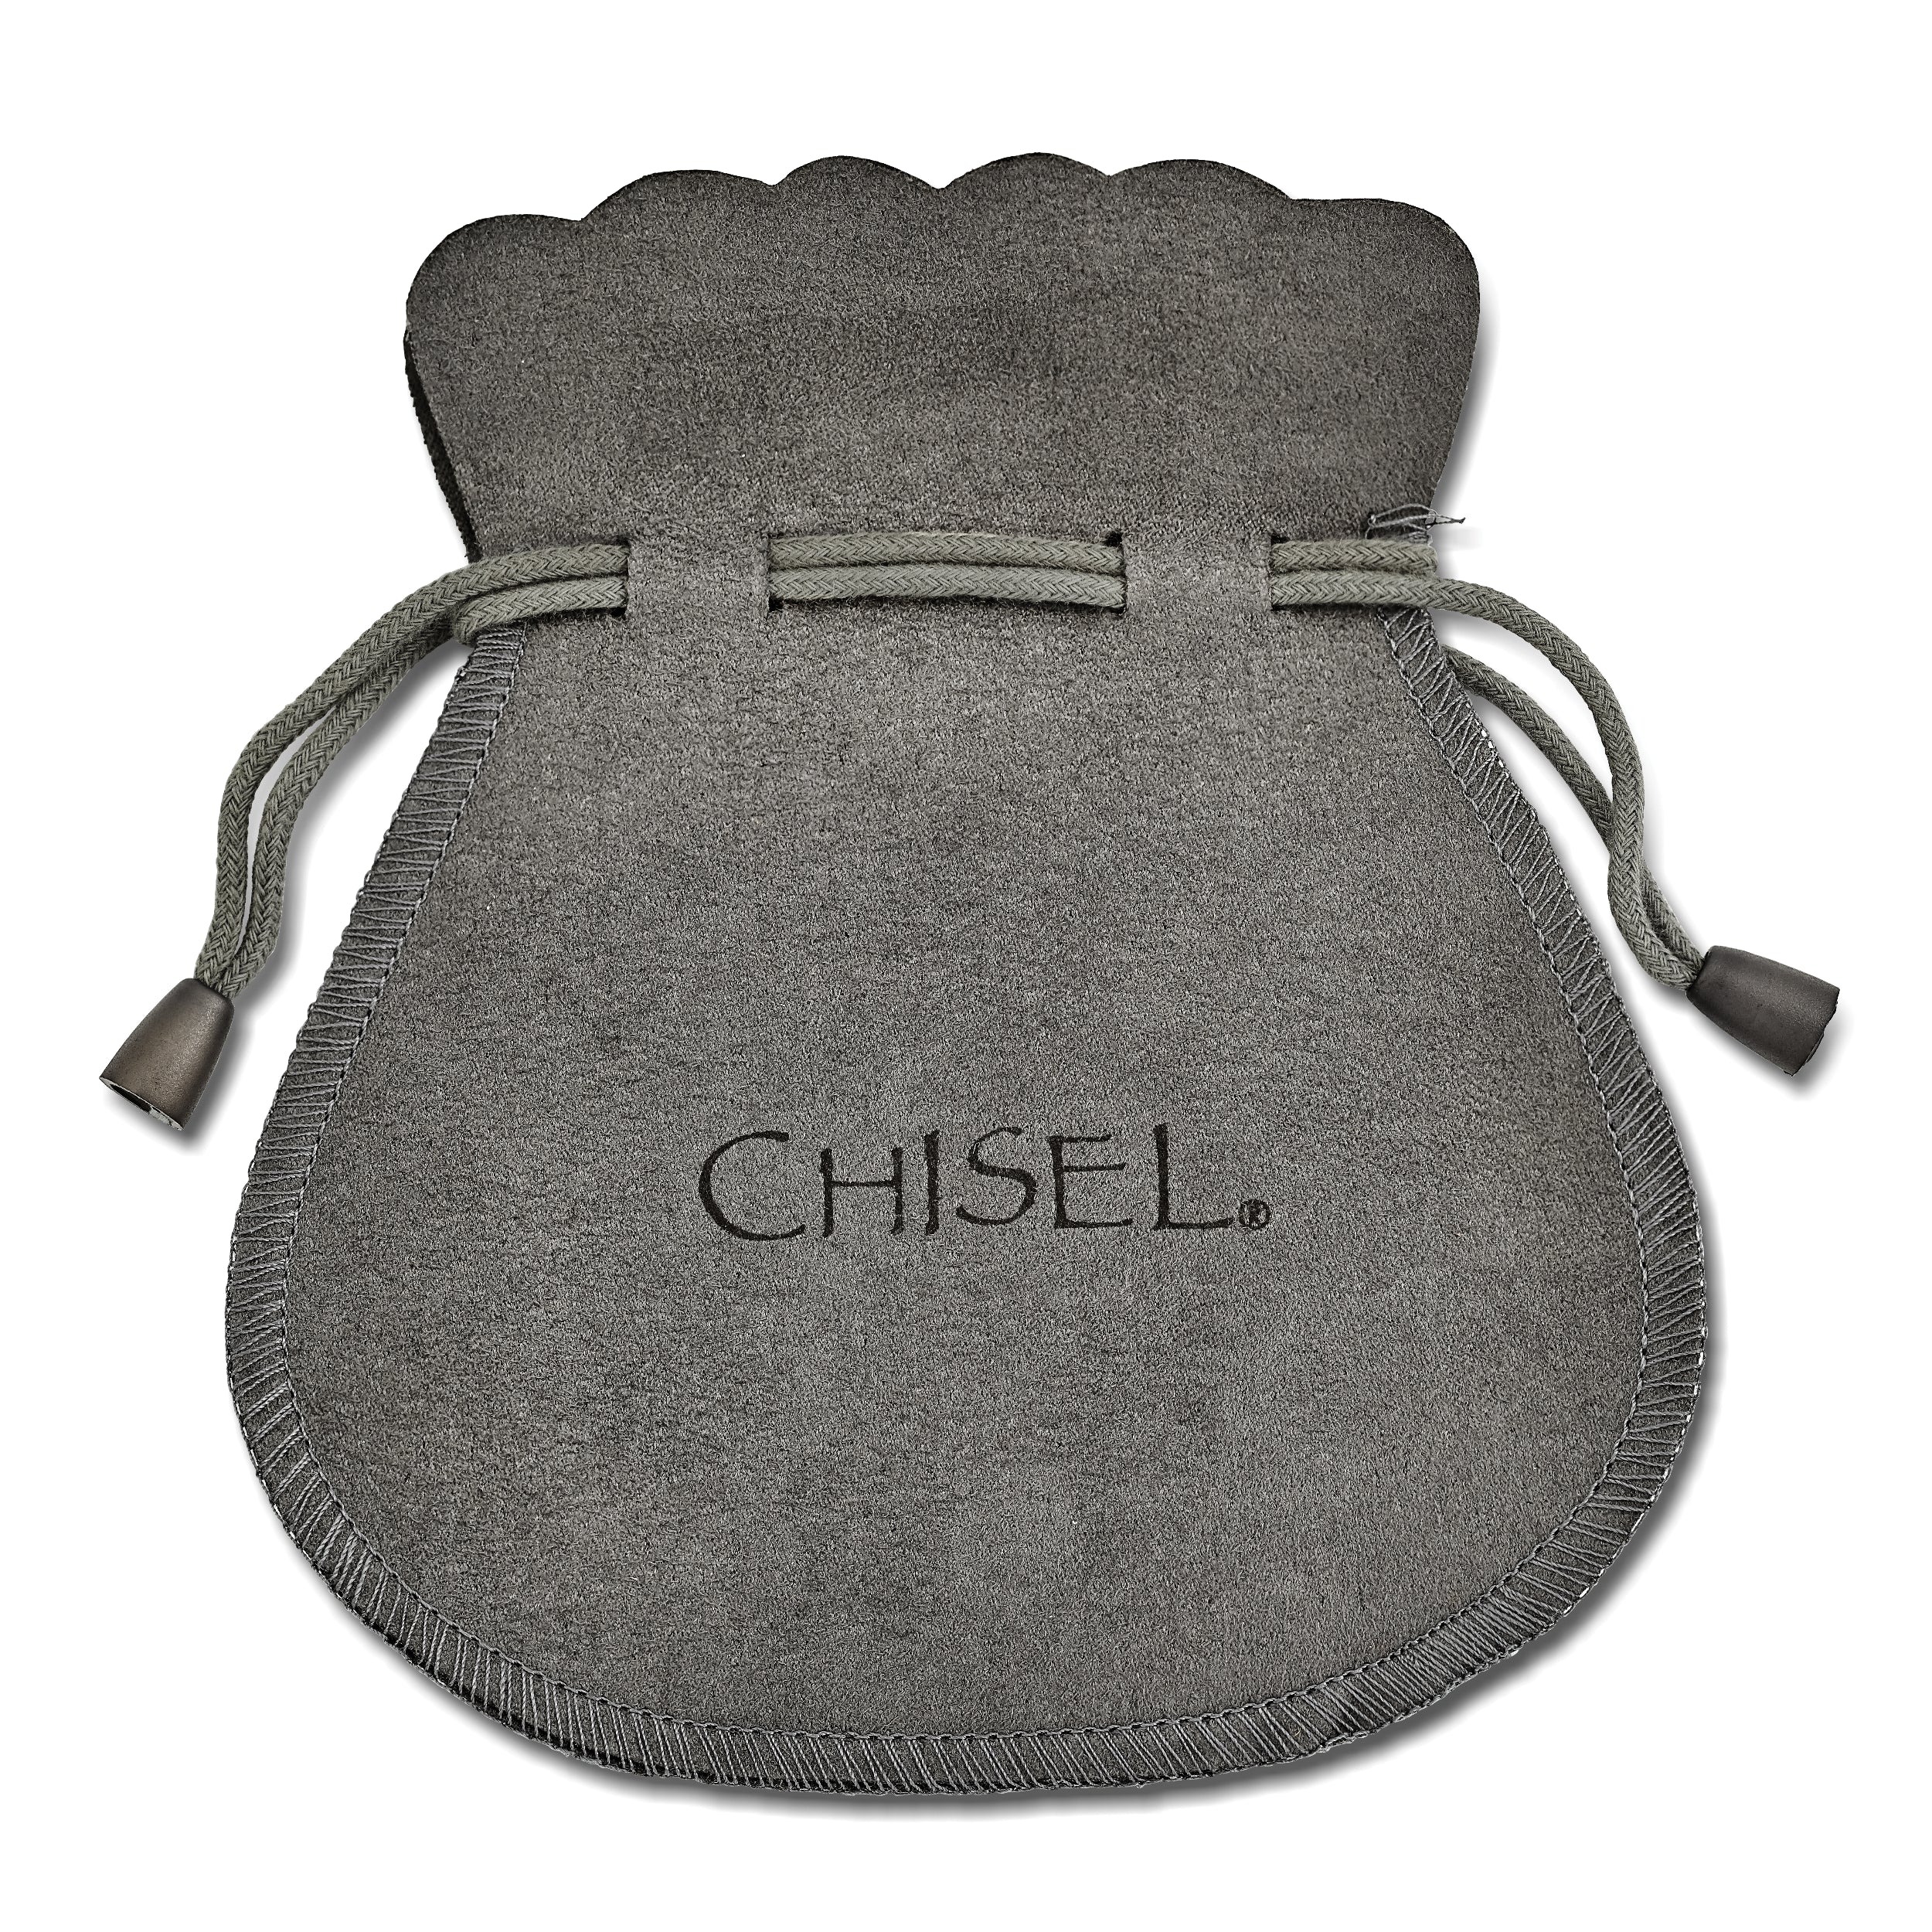 Chisel Titanium Polished with Black Rubber Design Cuff Bangle